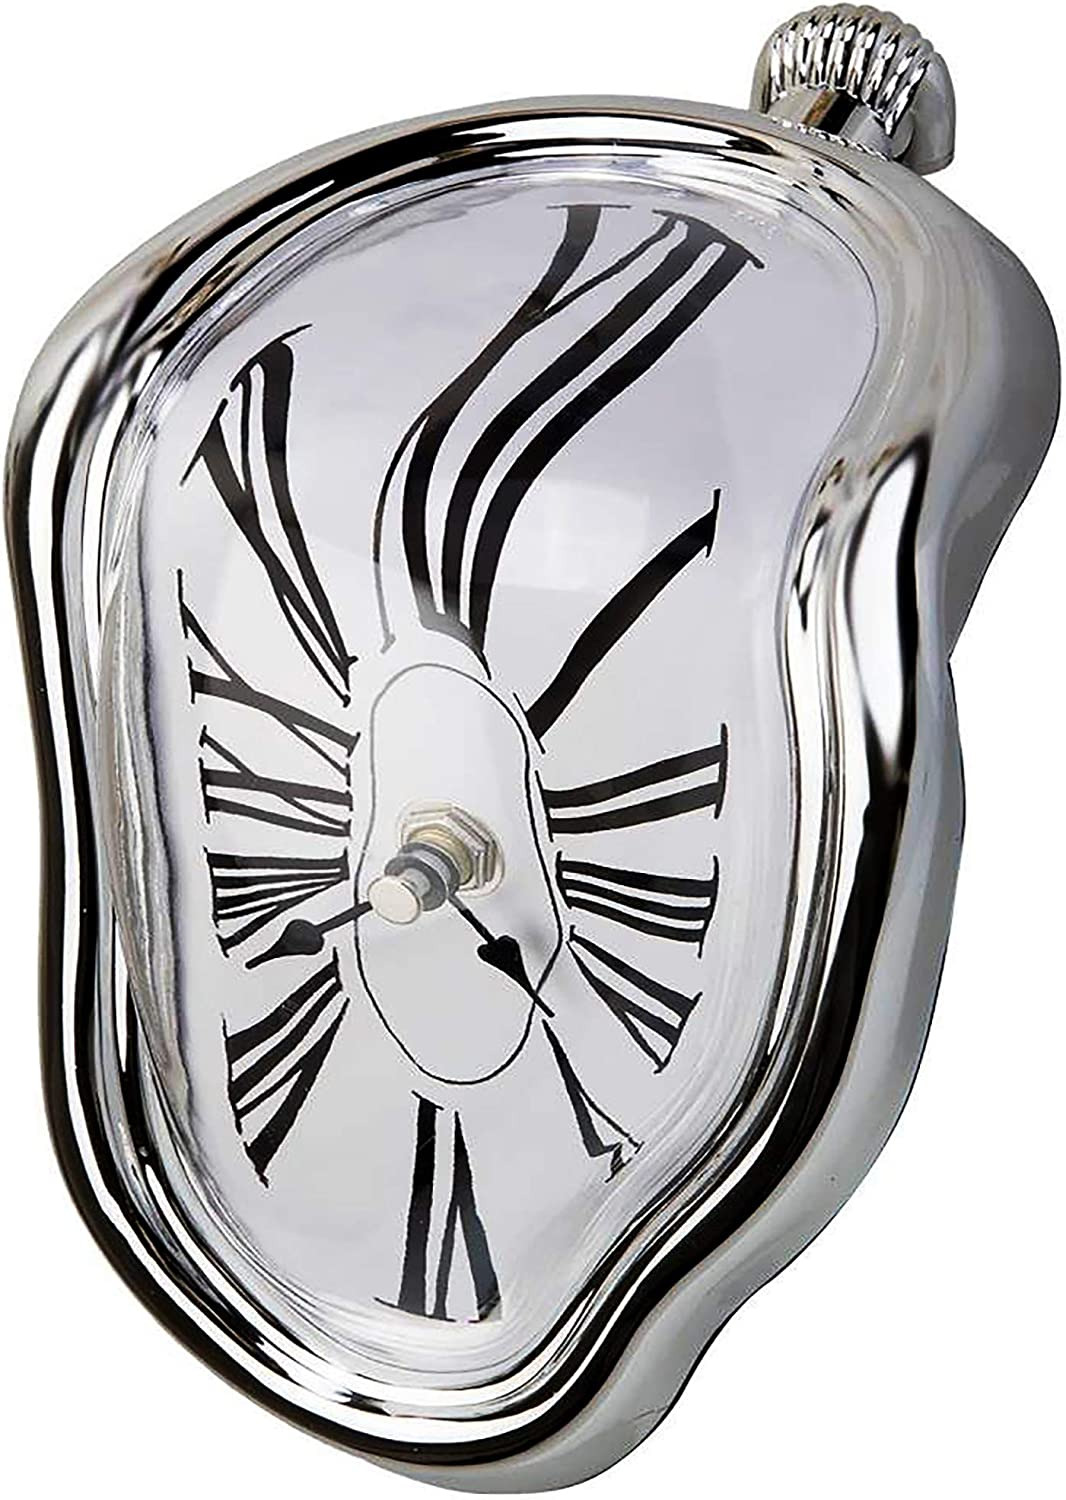 Decorative Dali Watch Melting Clock - Surrealistic Table Shelf Desk Fashion Melt